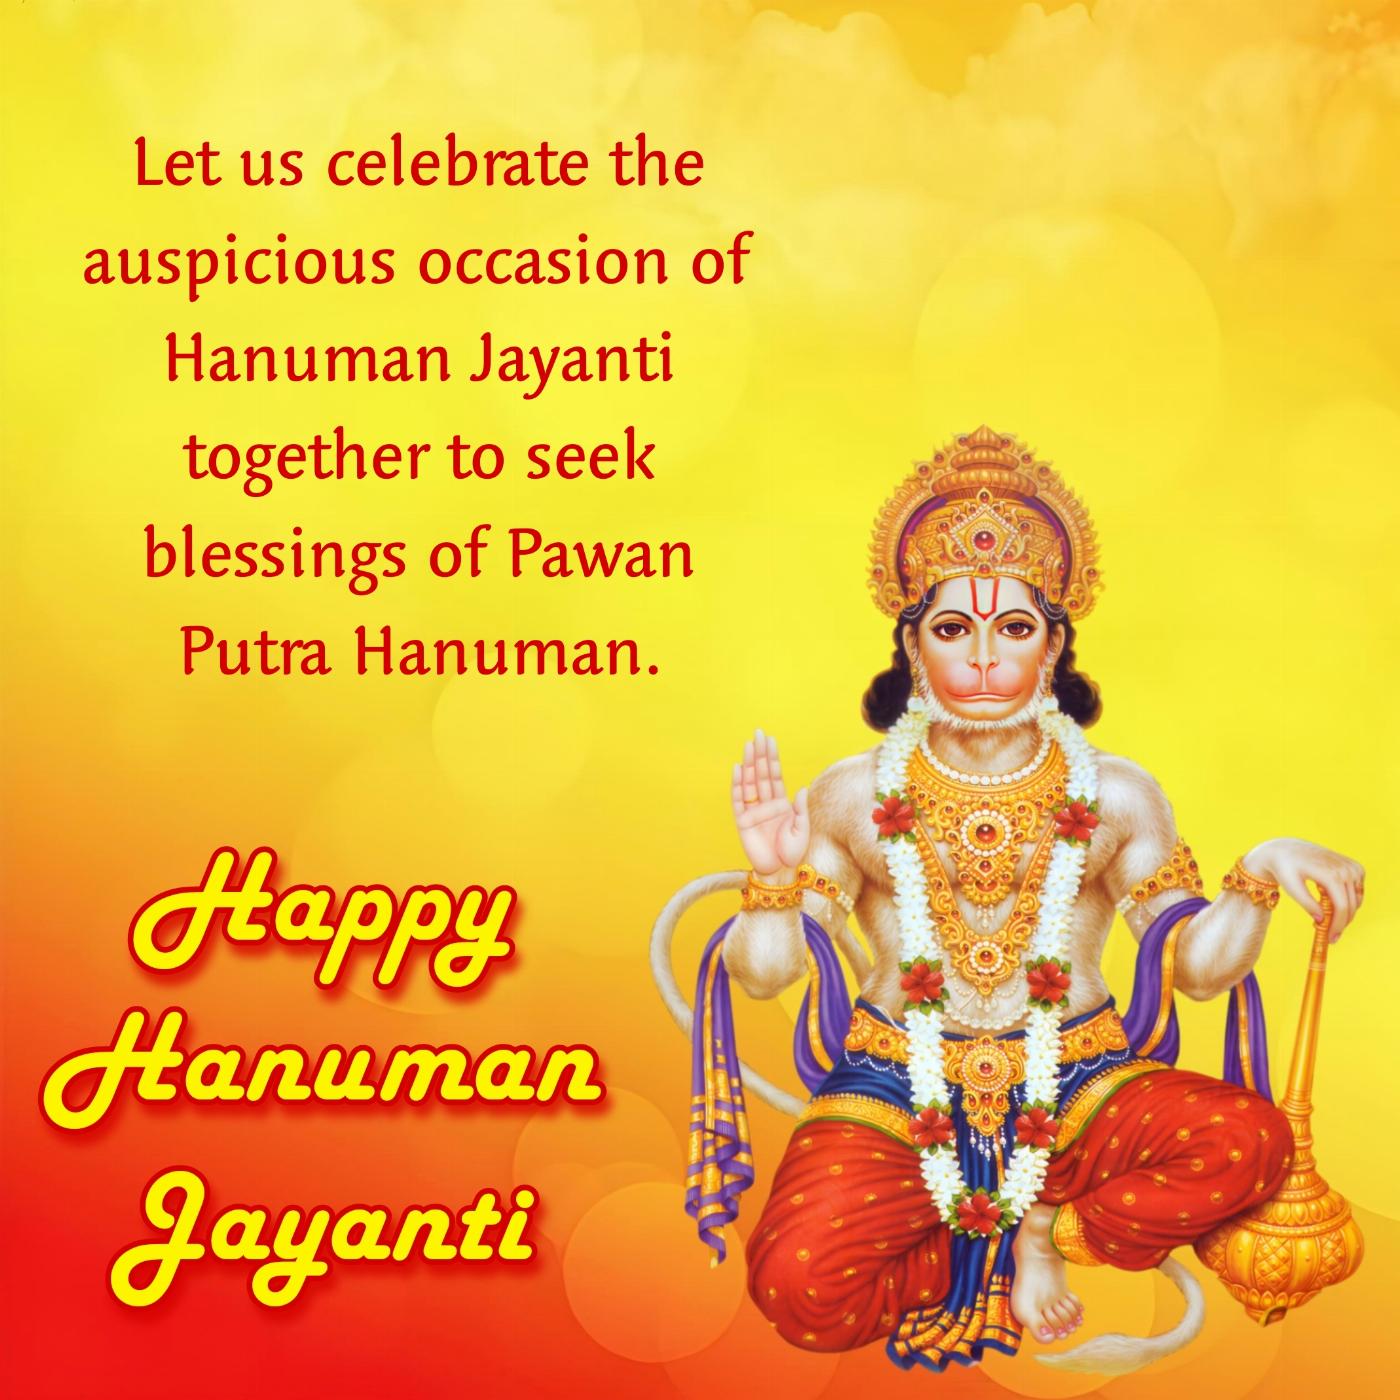 Let us celebrate the auspicious occasion of Hanuman Jayanti